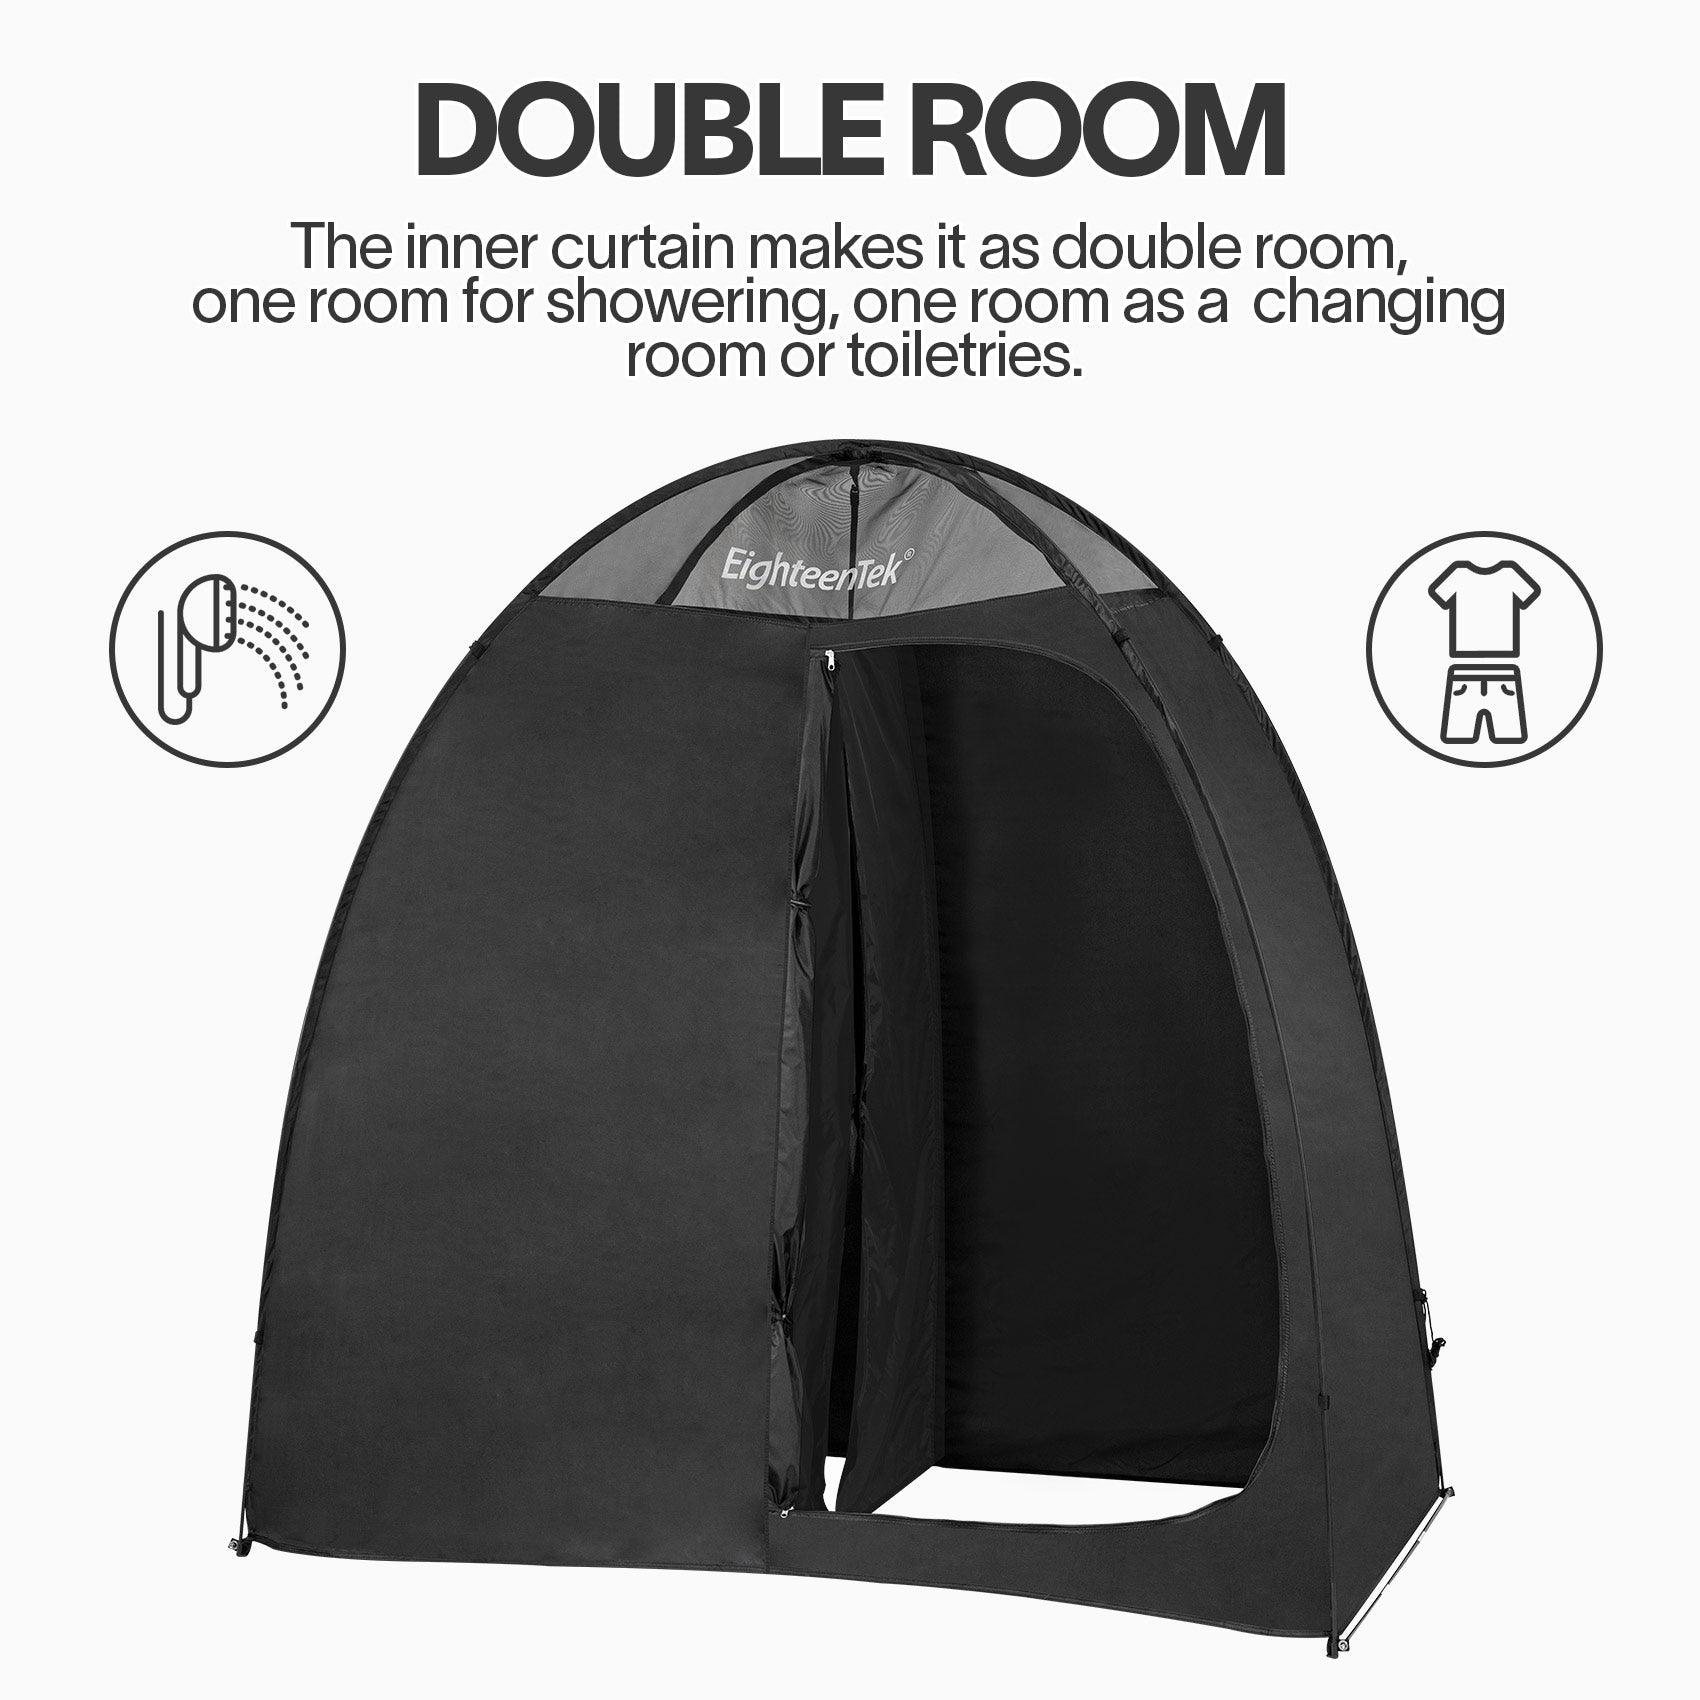 Pop Up Camper Sunbrella Fabric Repair Kit - Black